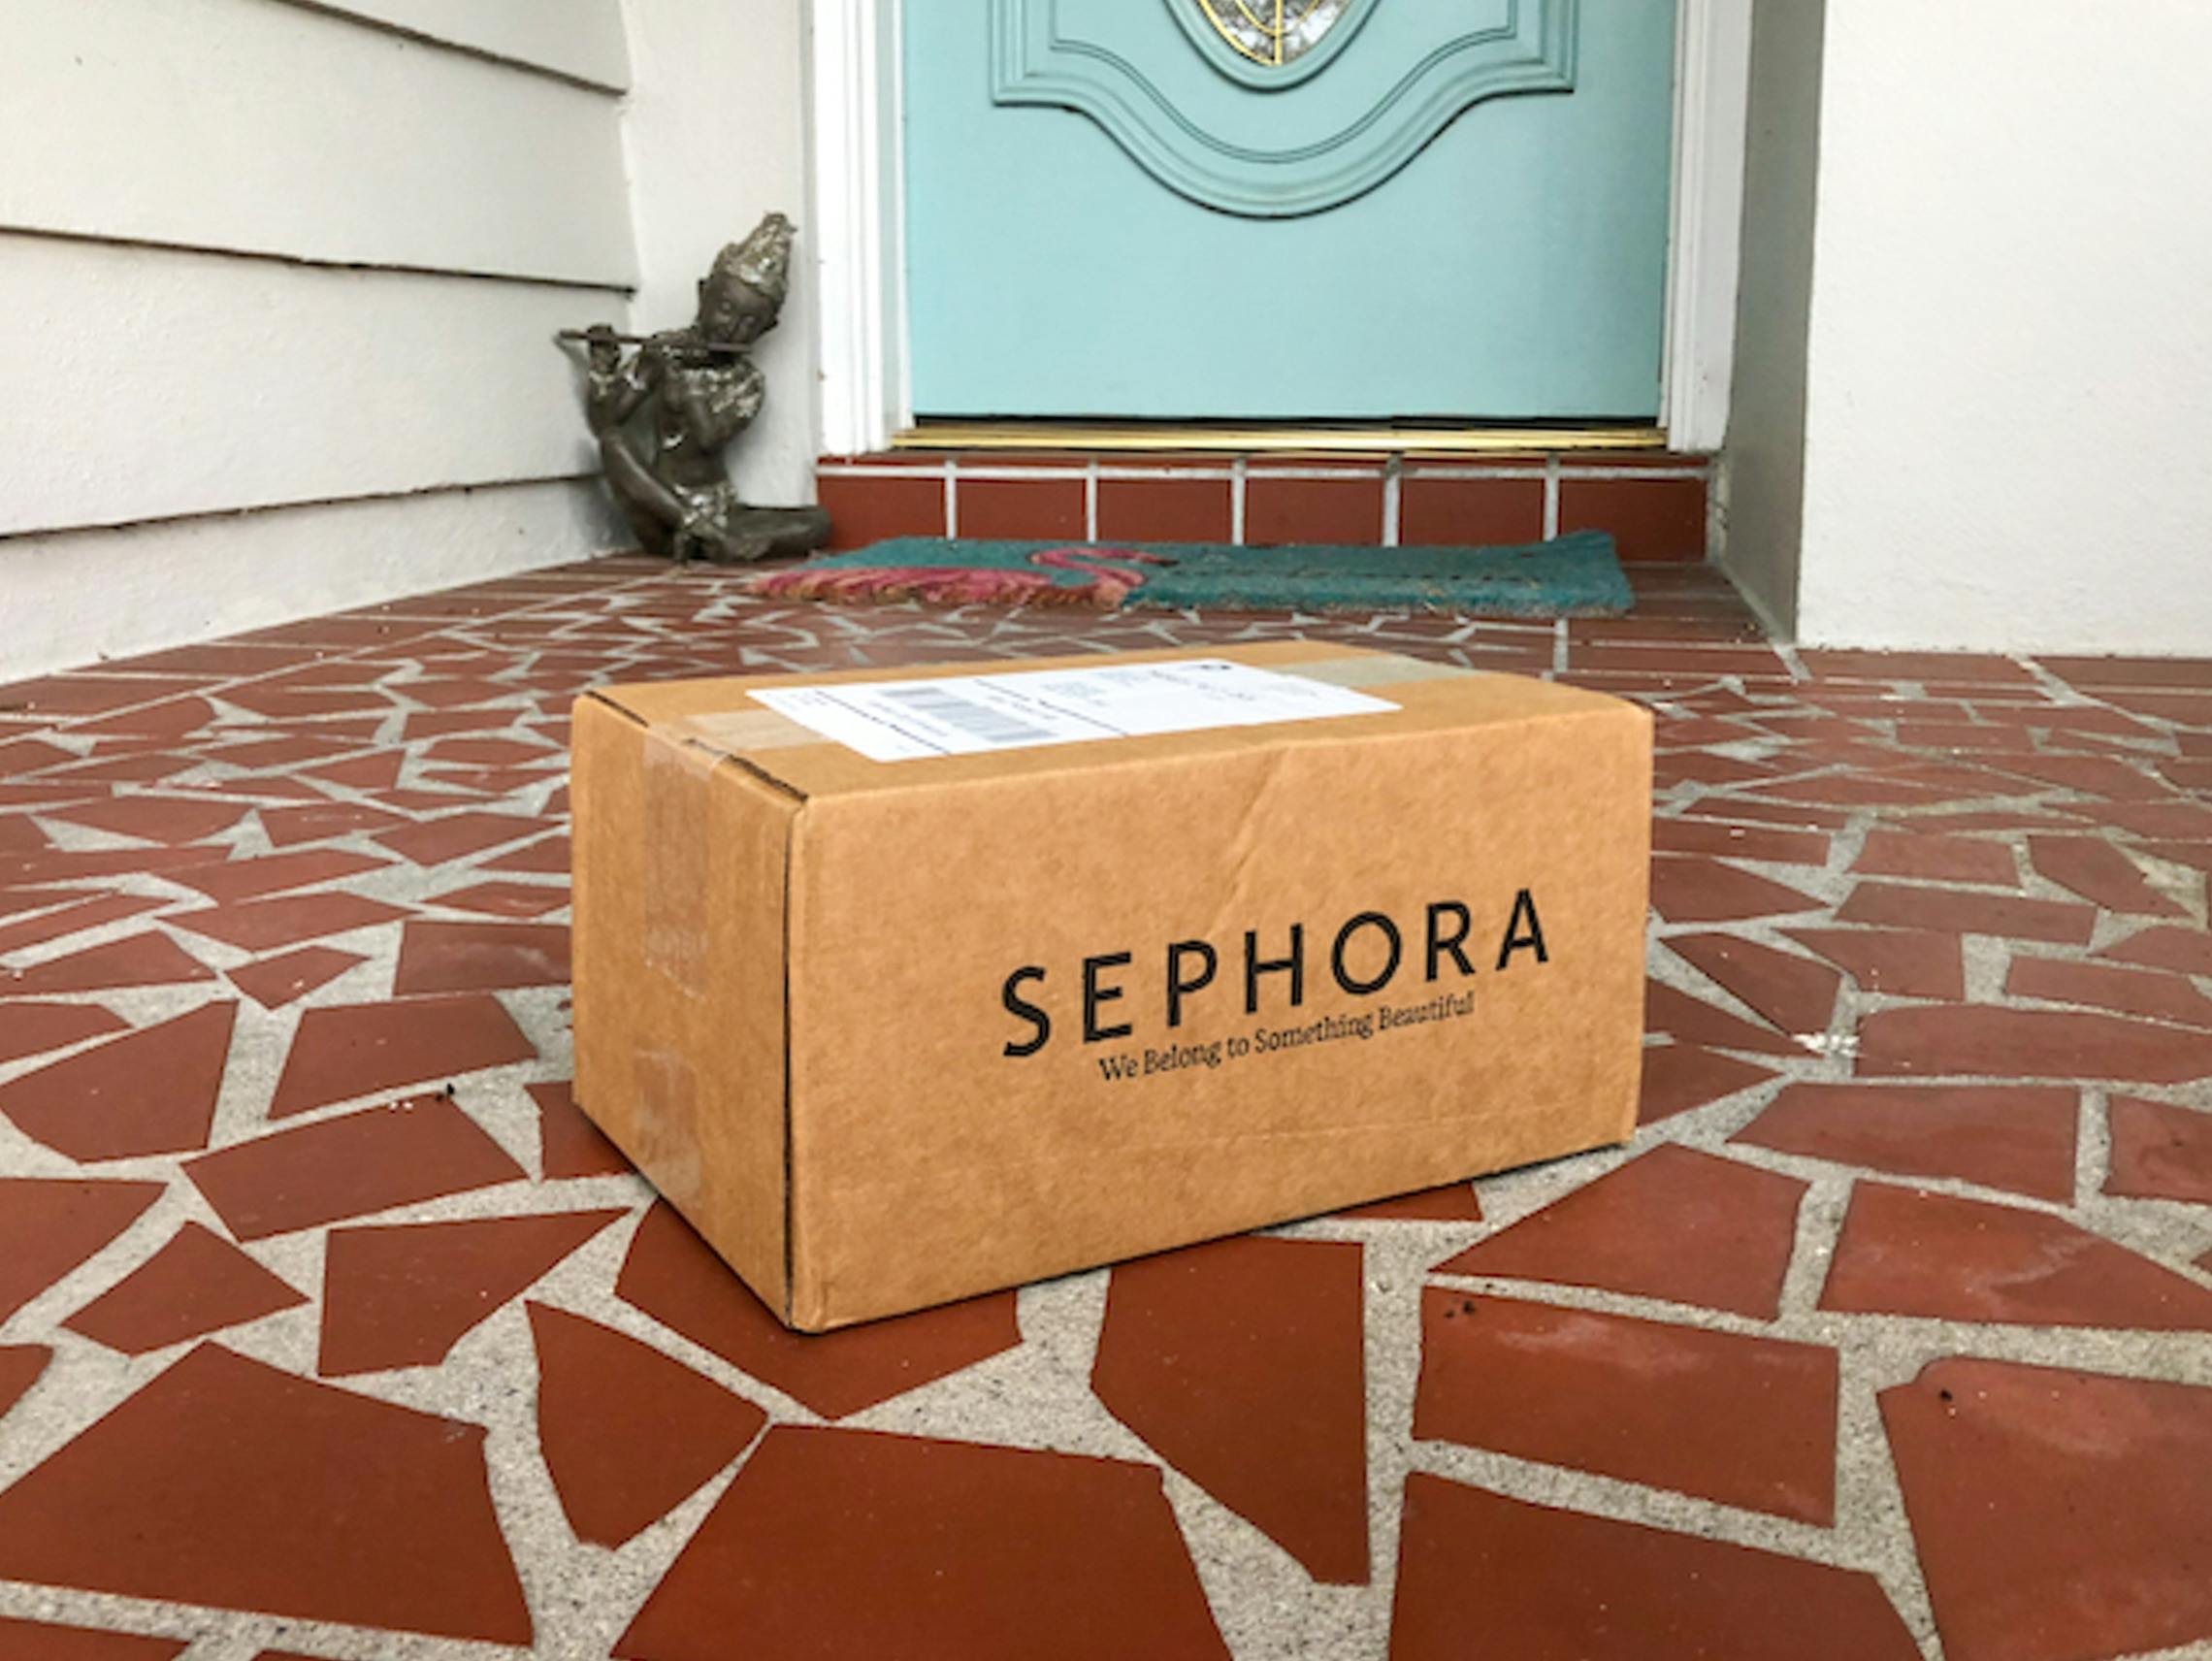 A Sephora box on a front doorstep.